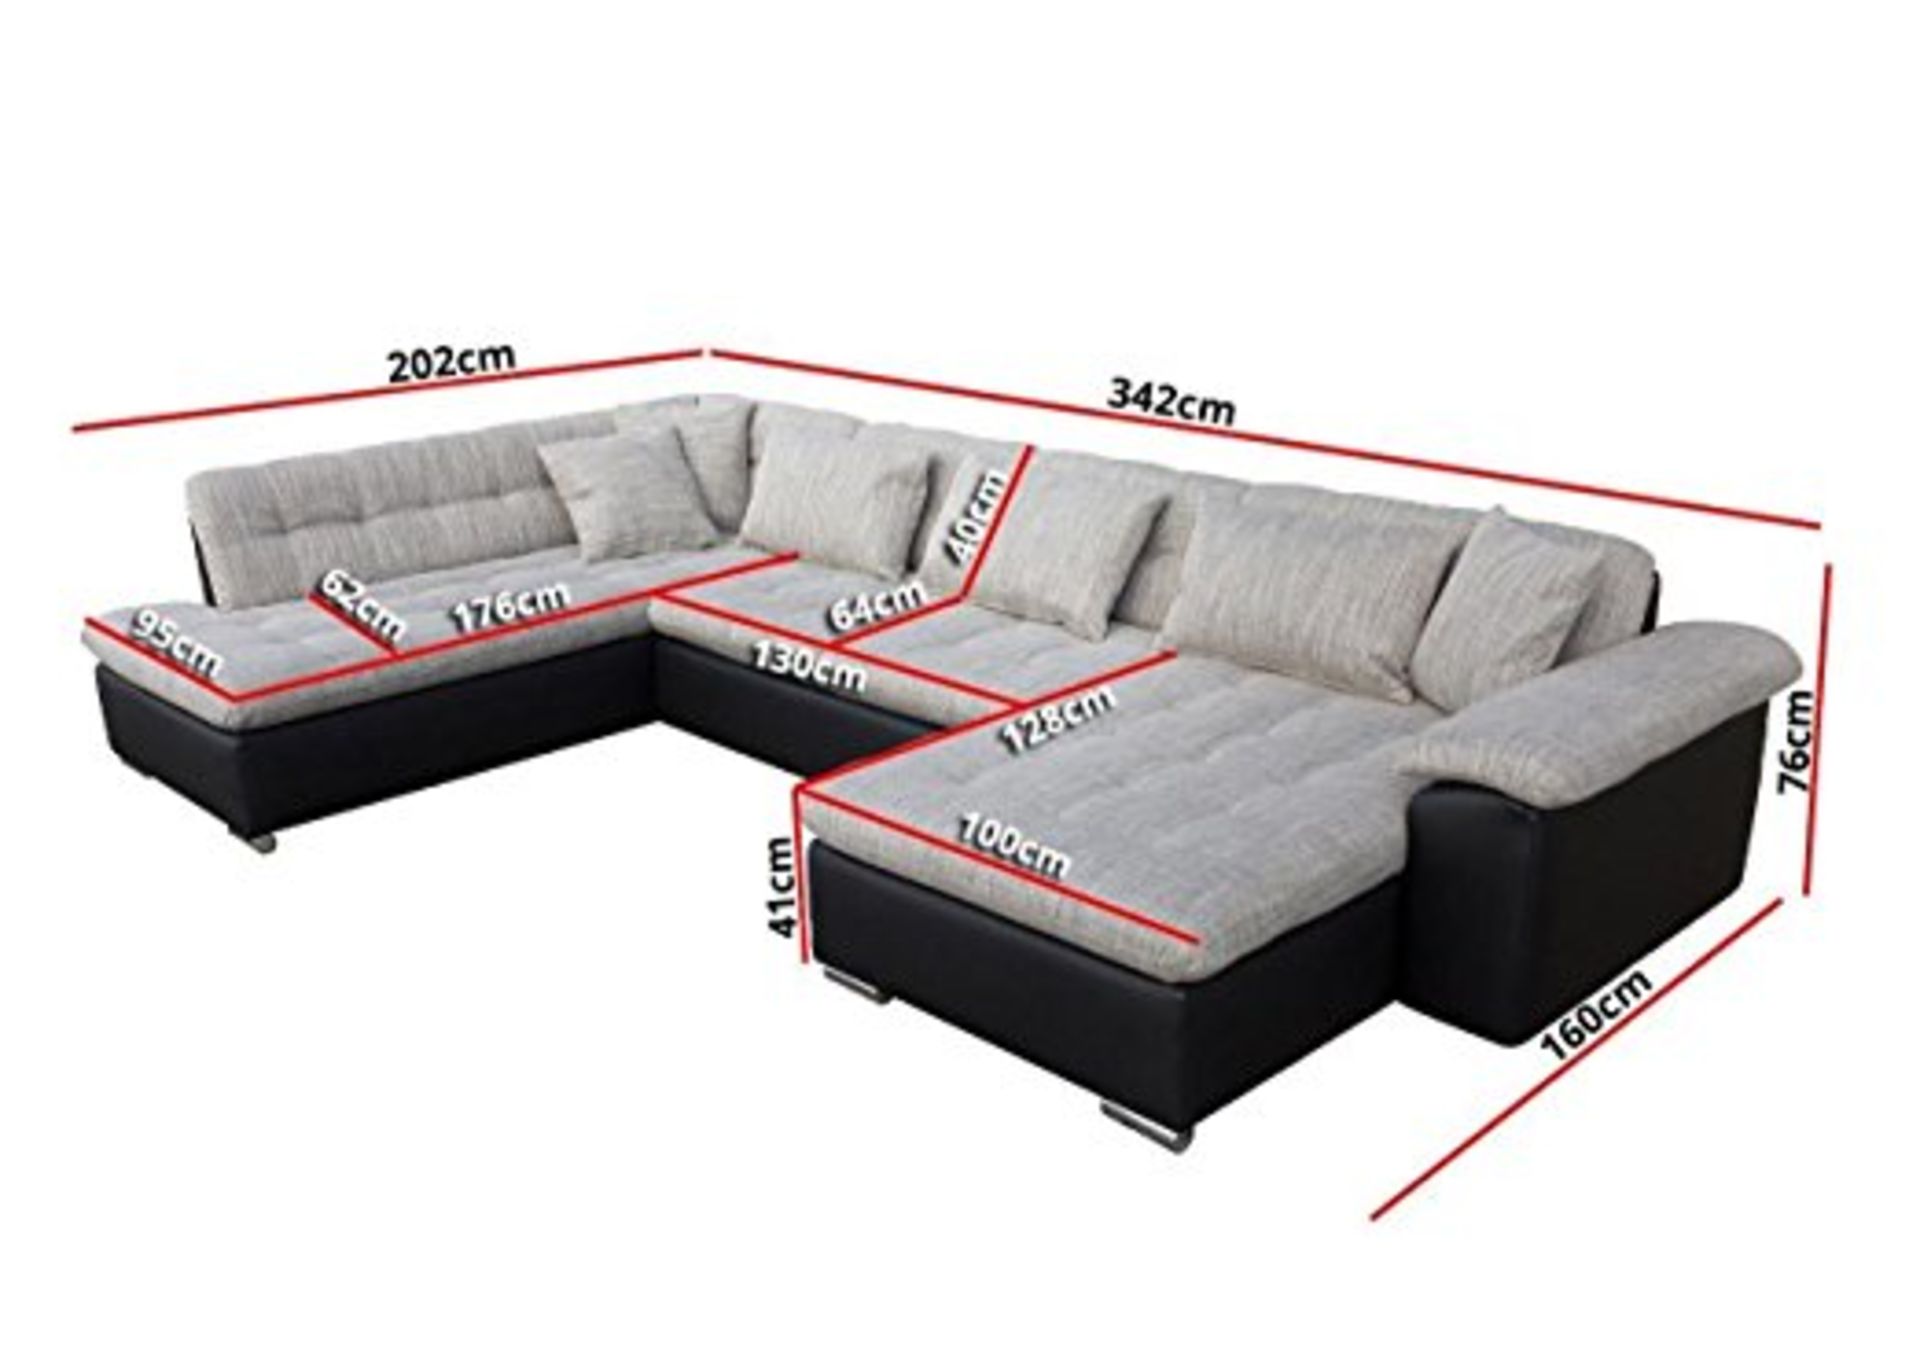 Salerno Right Hand Facing Large Corner Storage Sofa Bed In Viper Black/Jumbo Grey - Image 2 of 2